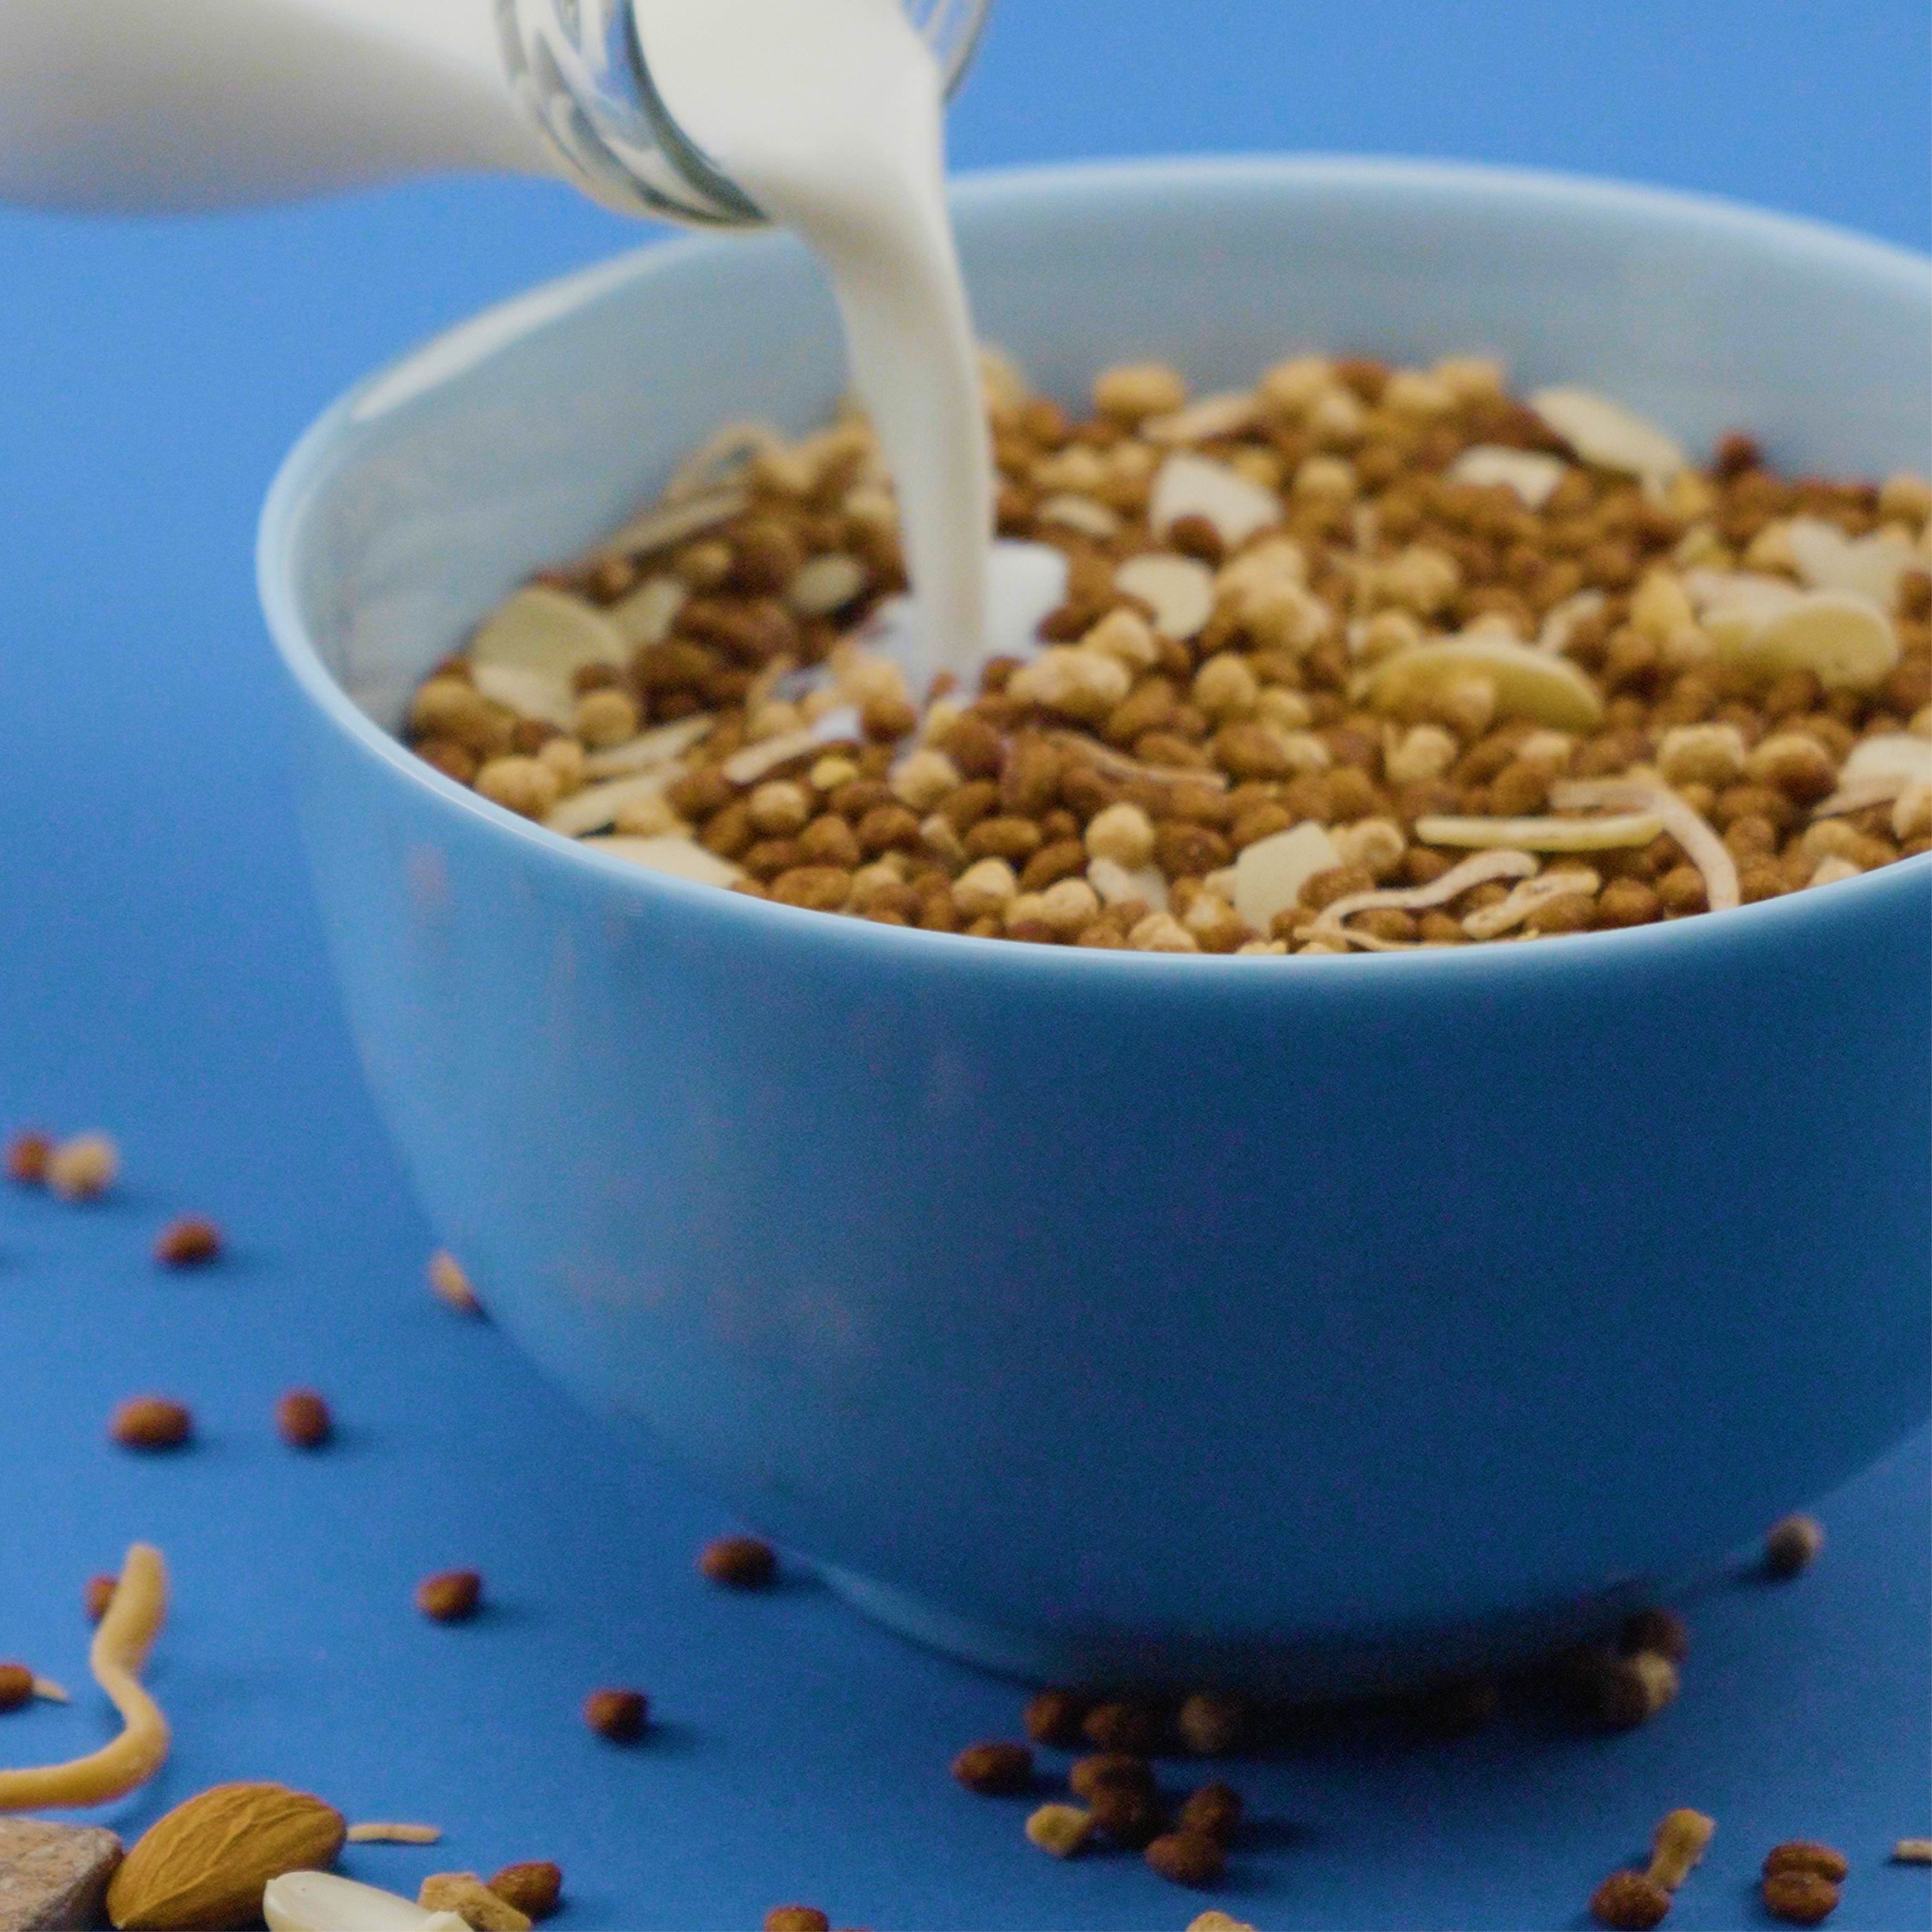 Cereal NÜWA Cocoa (300 gramos)